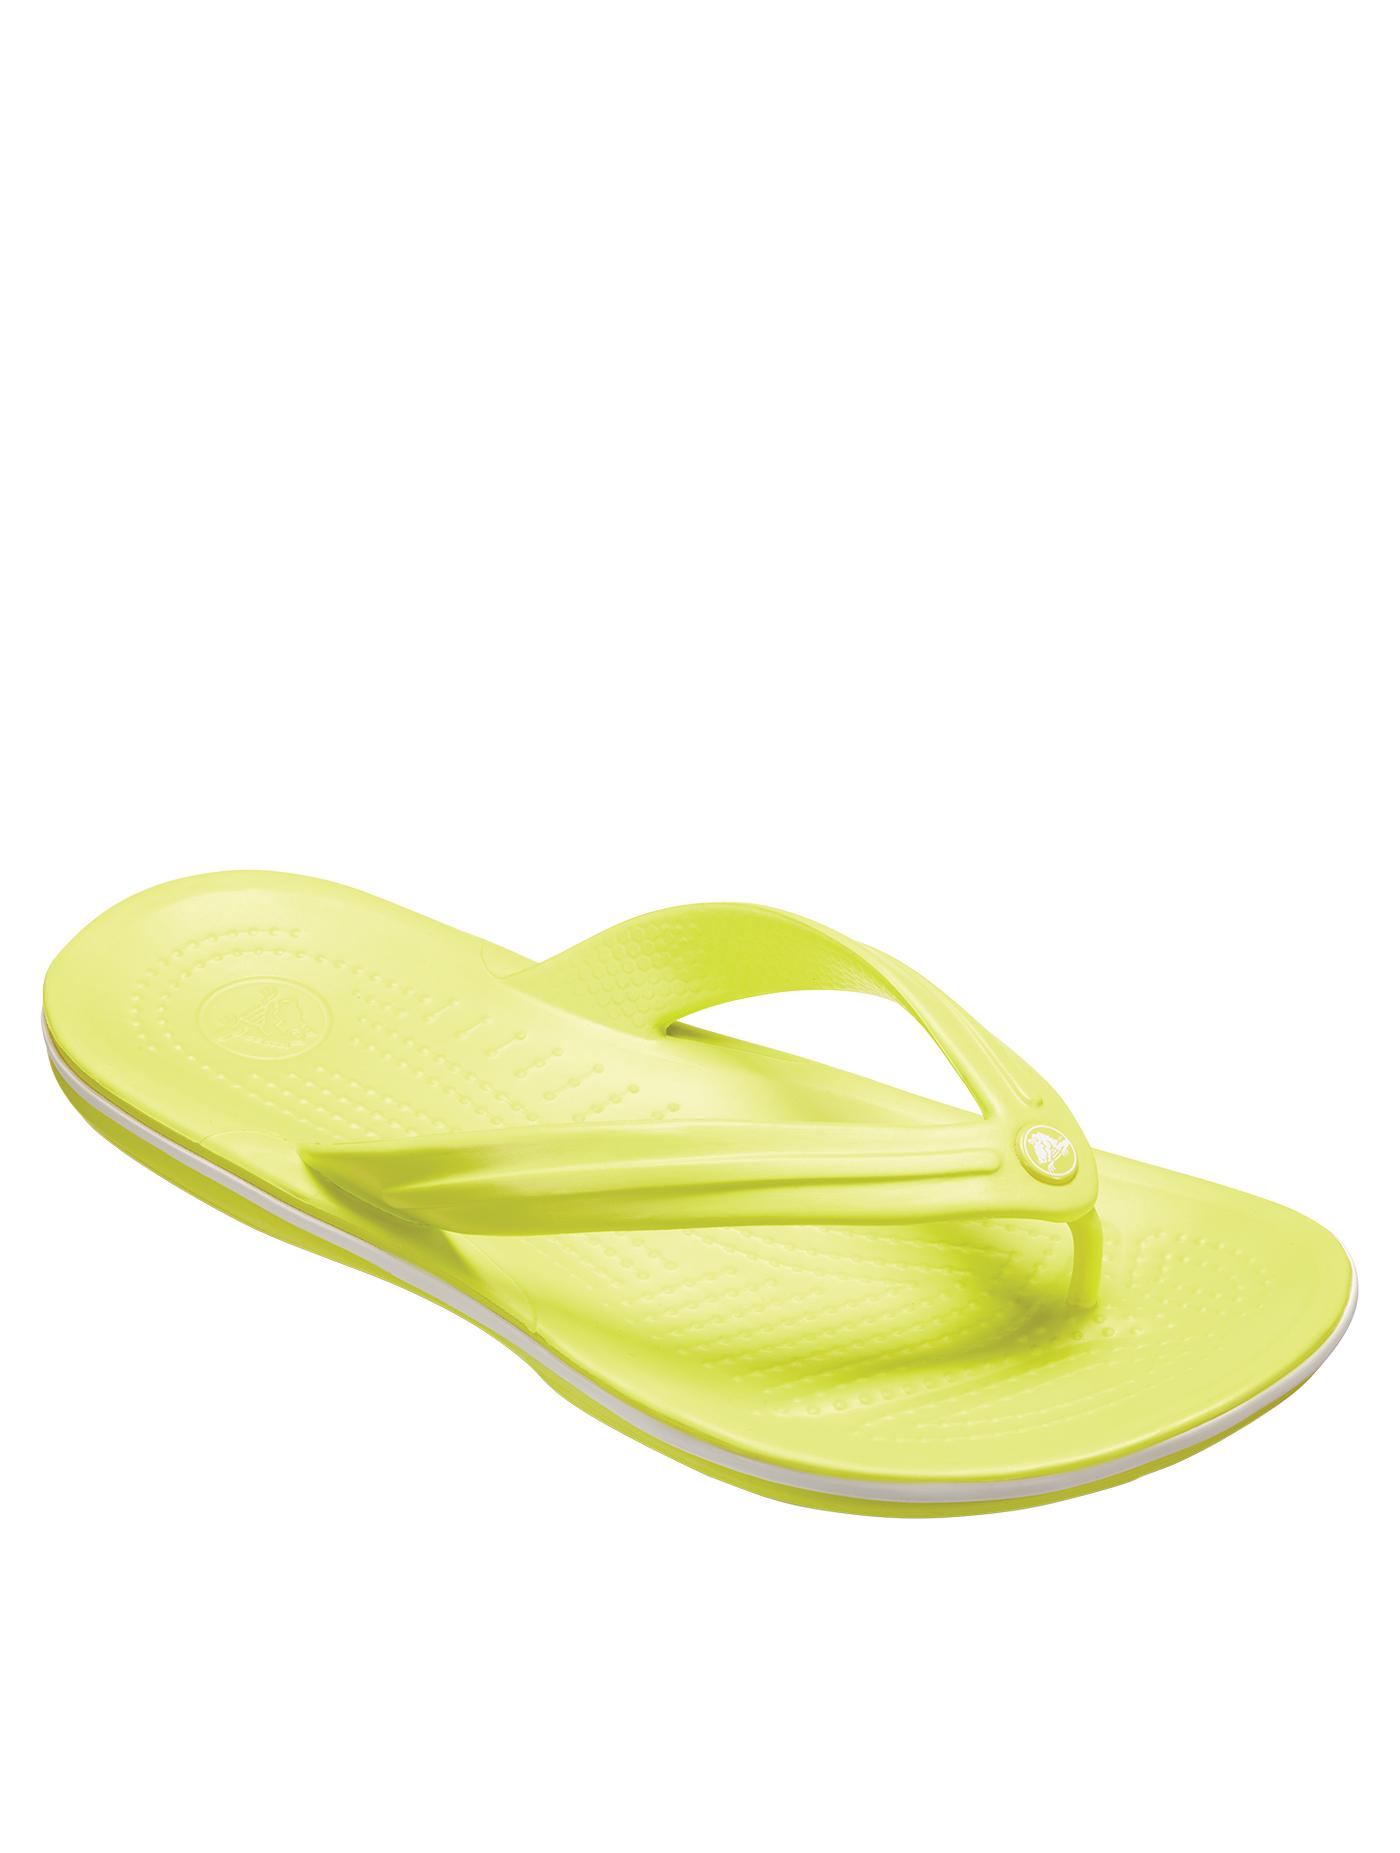 CROCS รองเท้าแตะสำหรับผู้ใหญ่ รุ่น Crocband Flip ไซส์ M6/W8 สี Tennis Ball Green-White